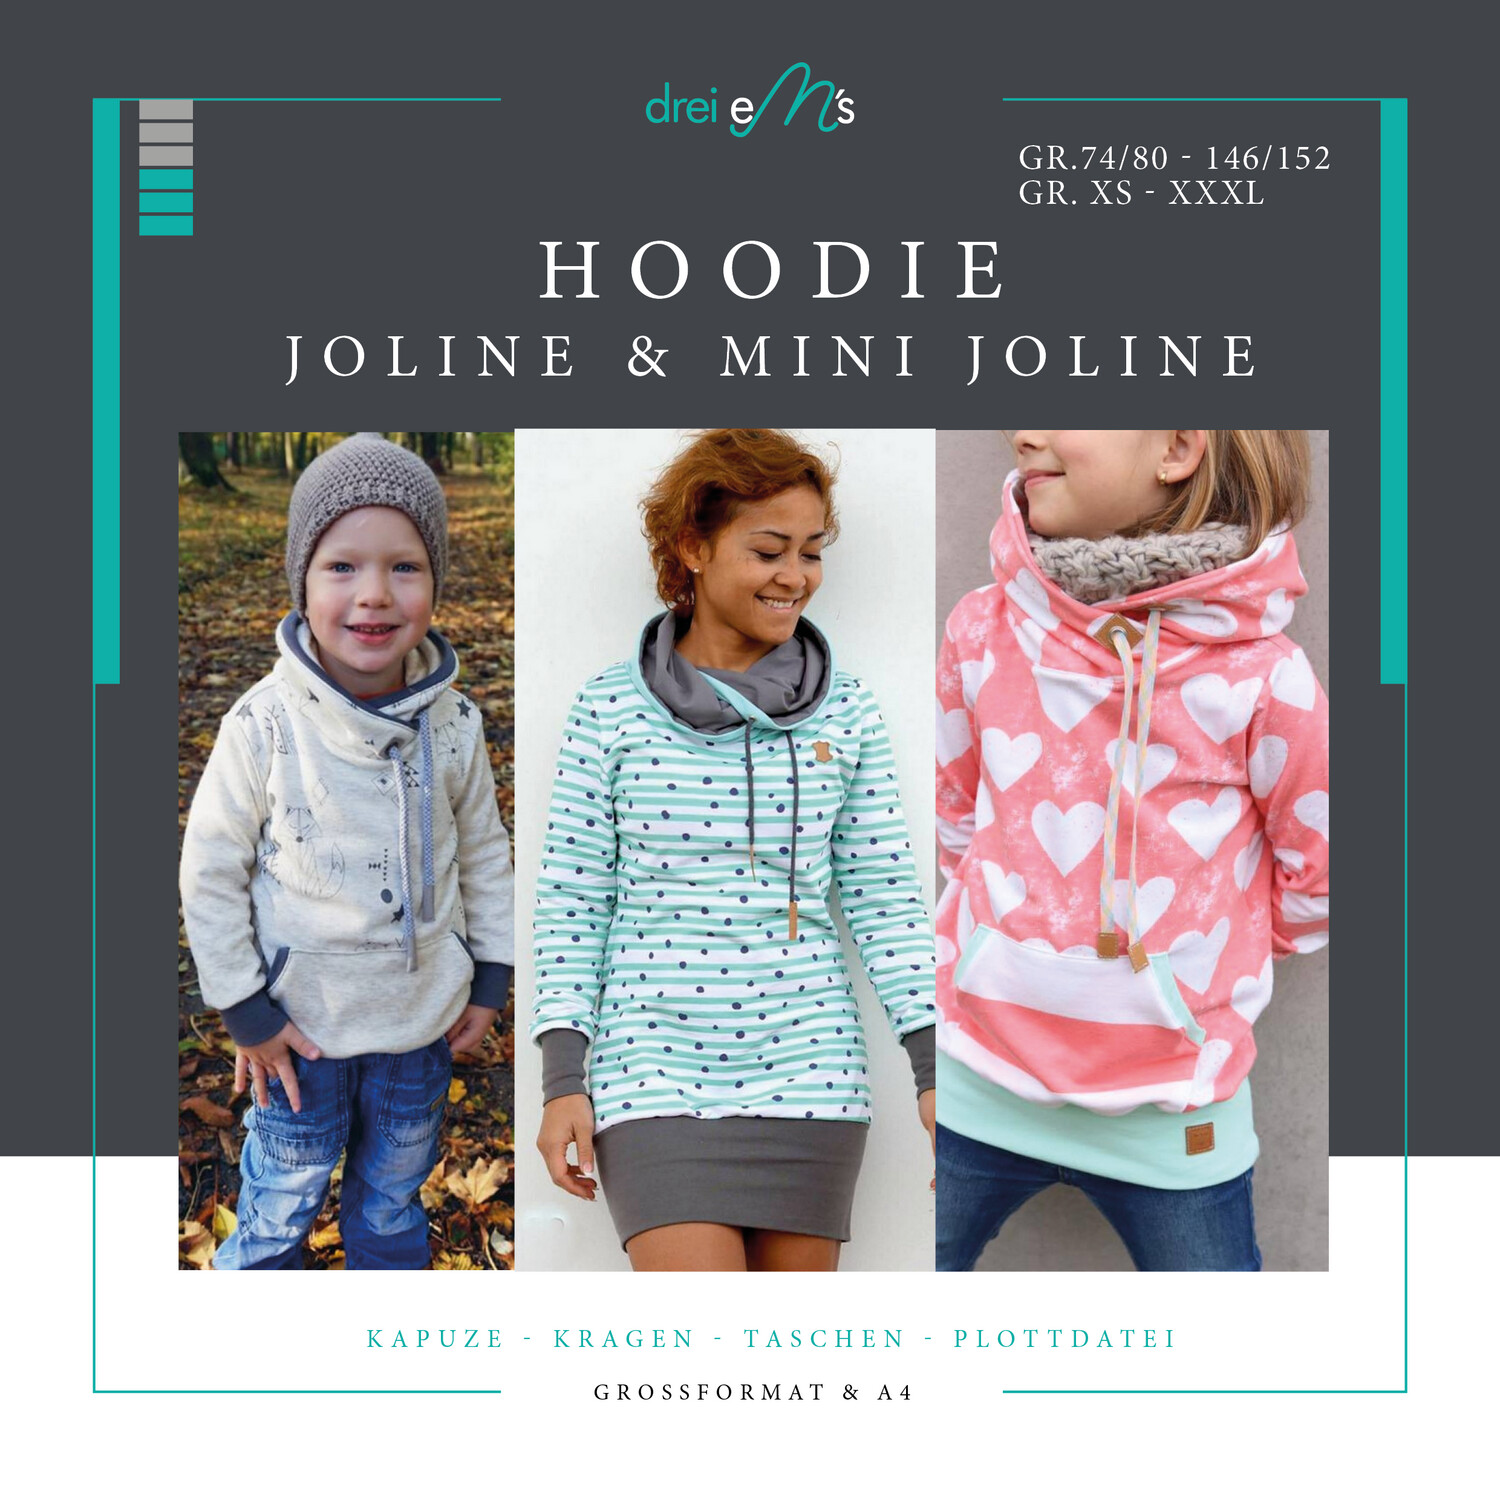 Ebook Hoodie mini JOLINE & JOLINE